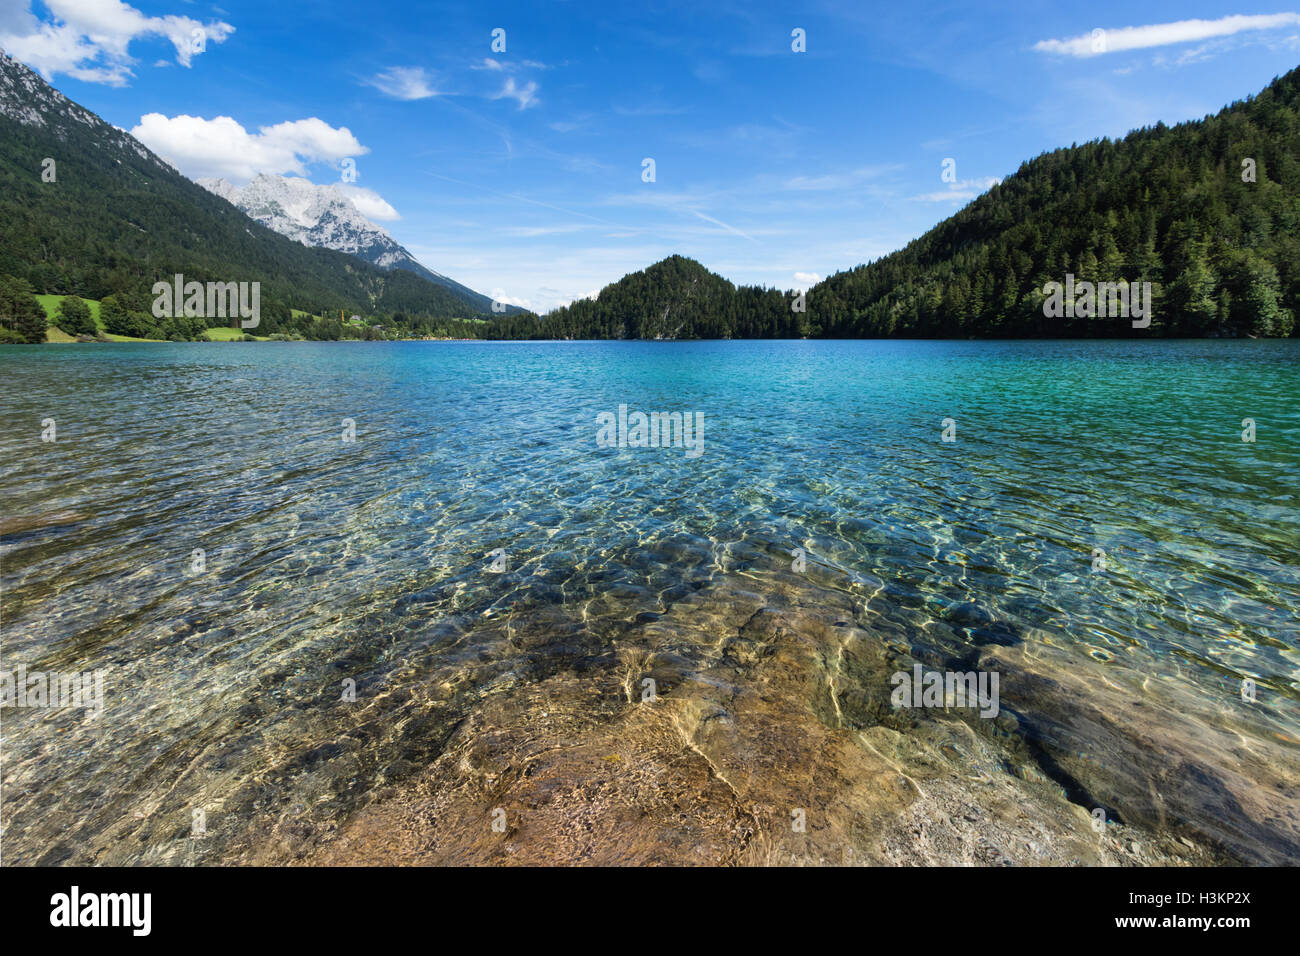 Mountain lake with turquoise blue water. Austria,Tyrol, Hintersteiner Lake Stock Photo